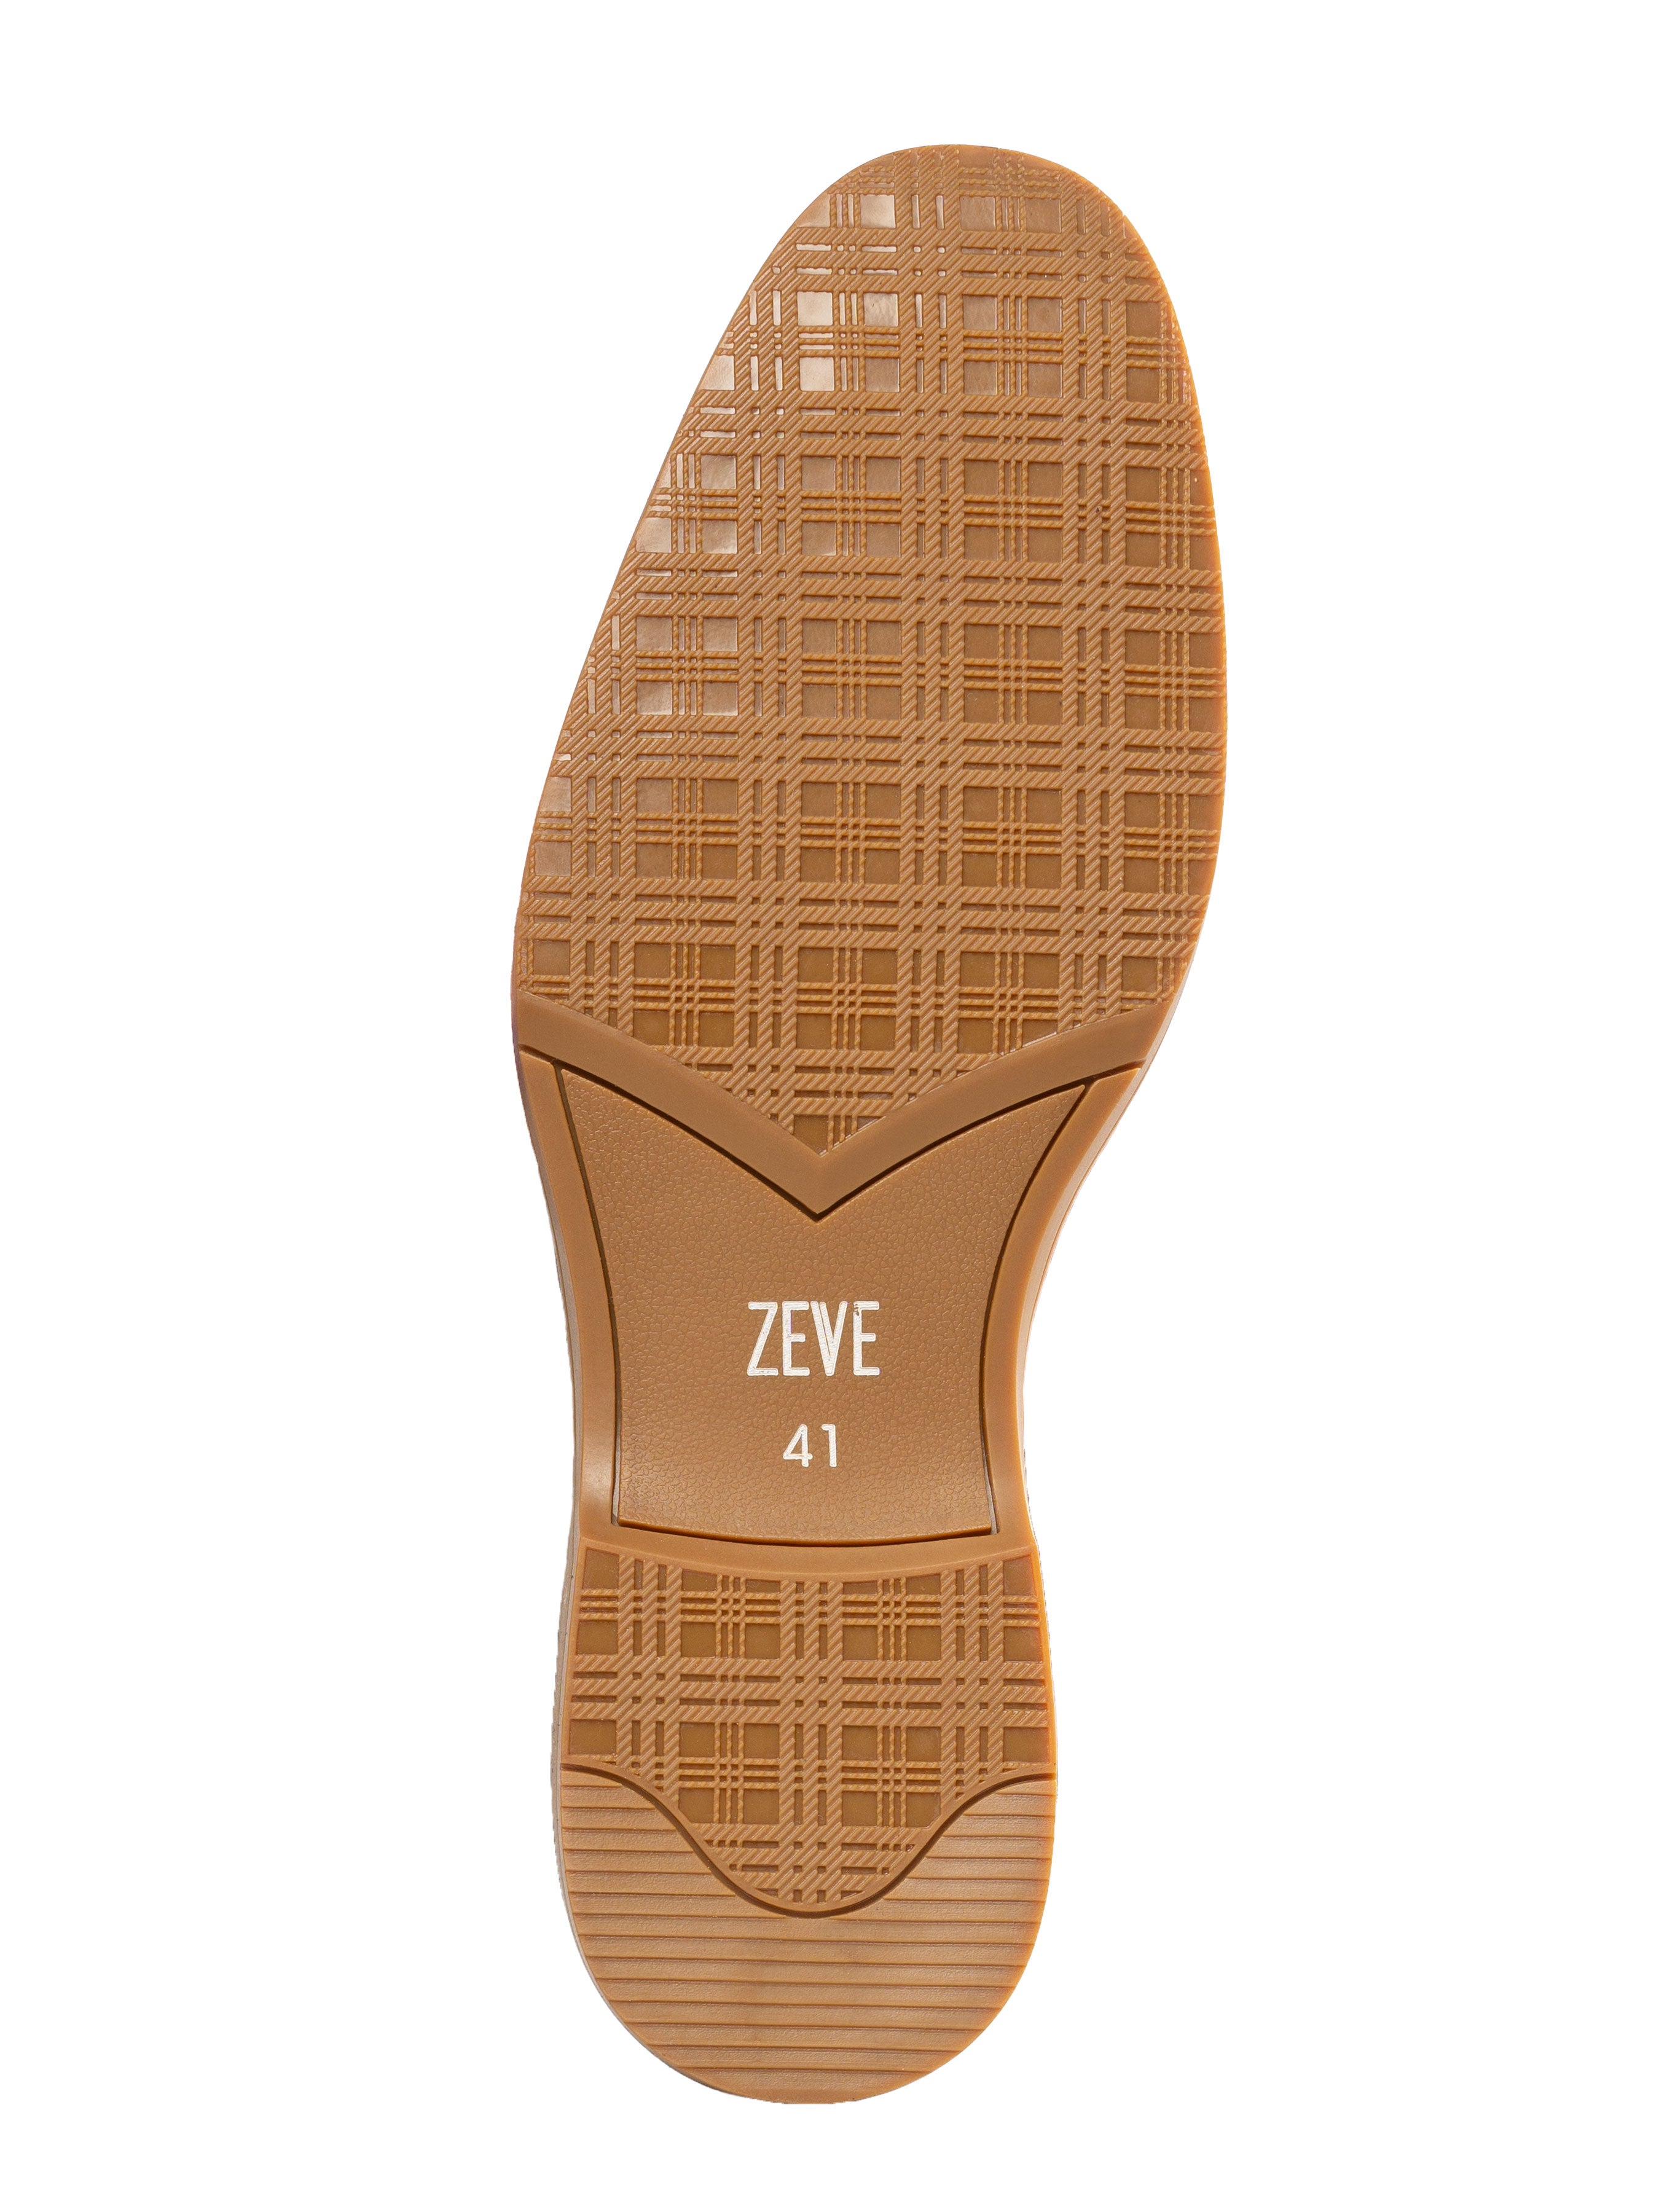 Belgian Loafer Penny - Camel Suede Leather (Soflex Sole) - Zeve Shoes